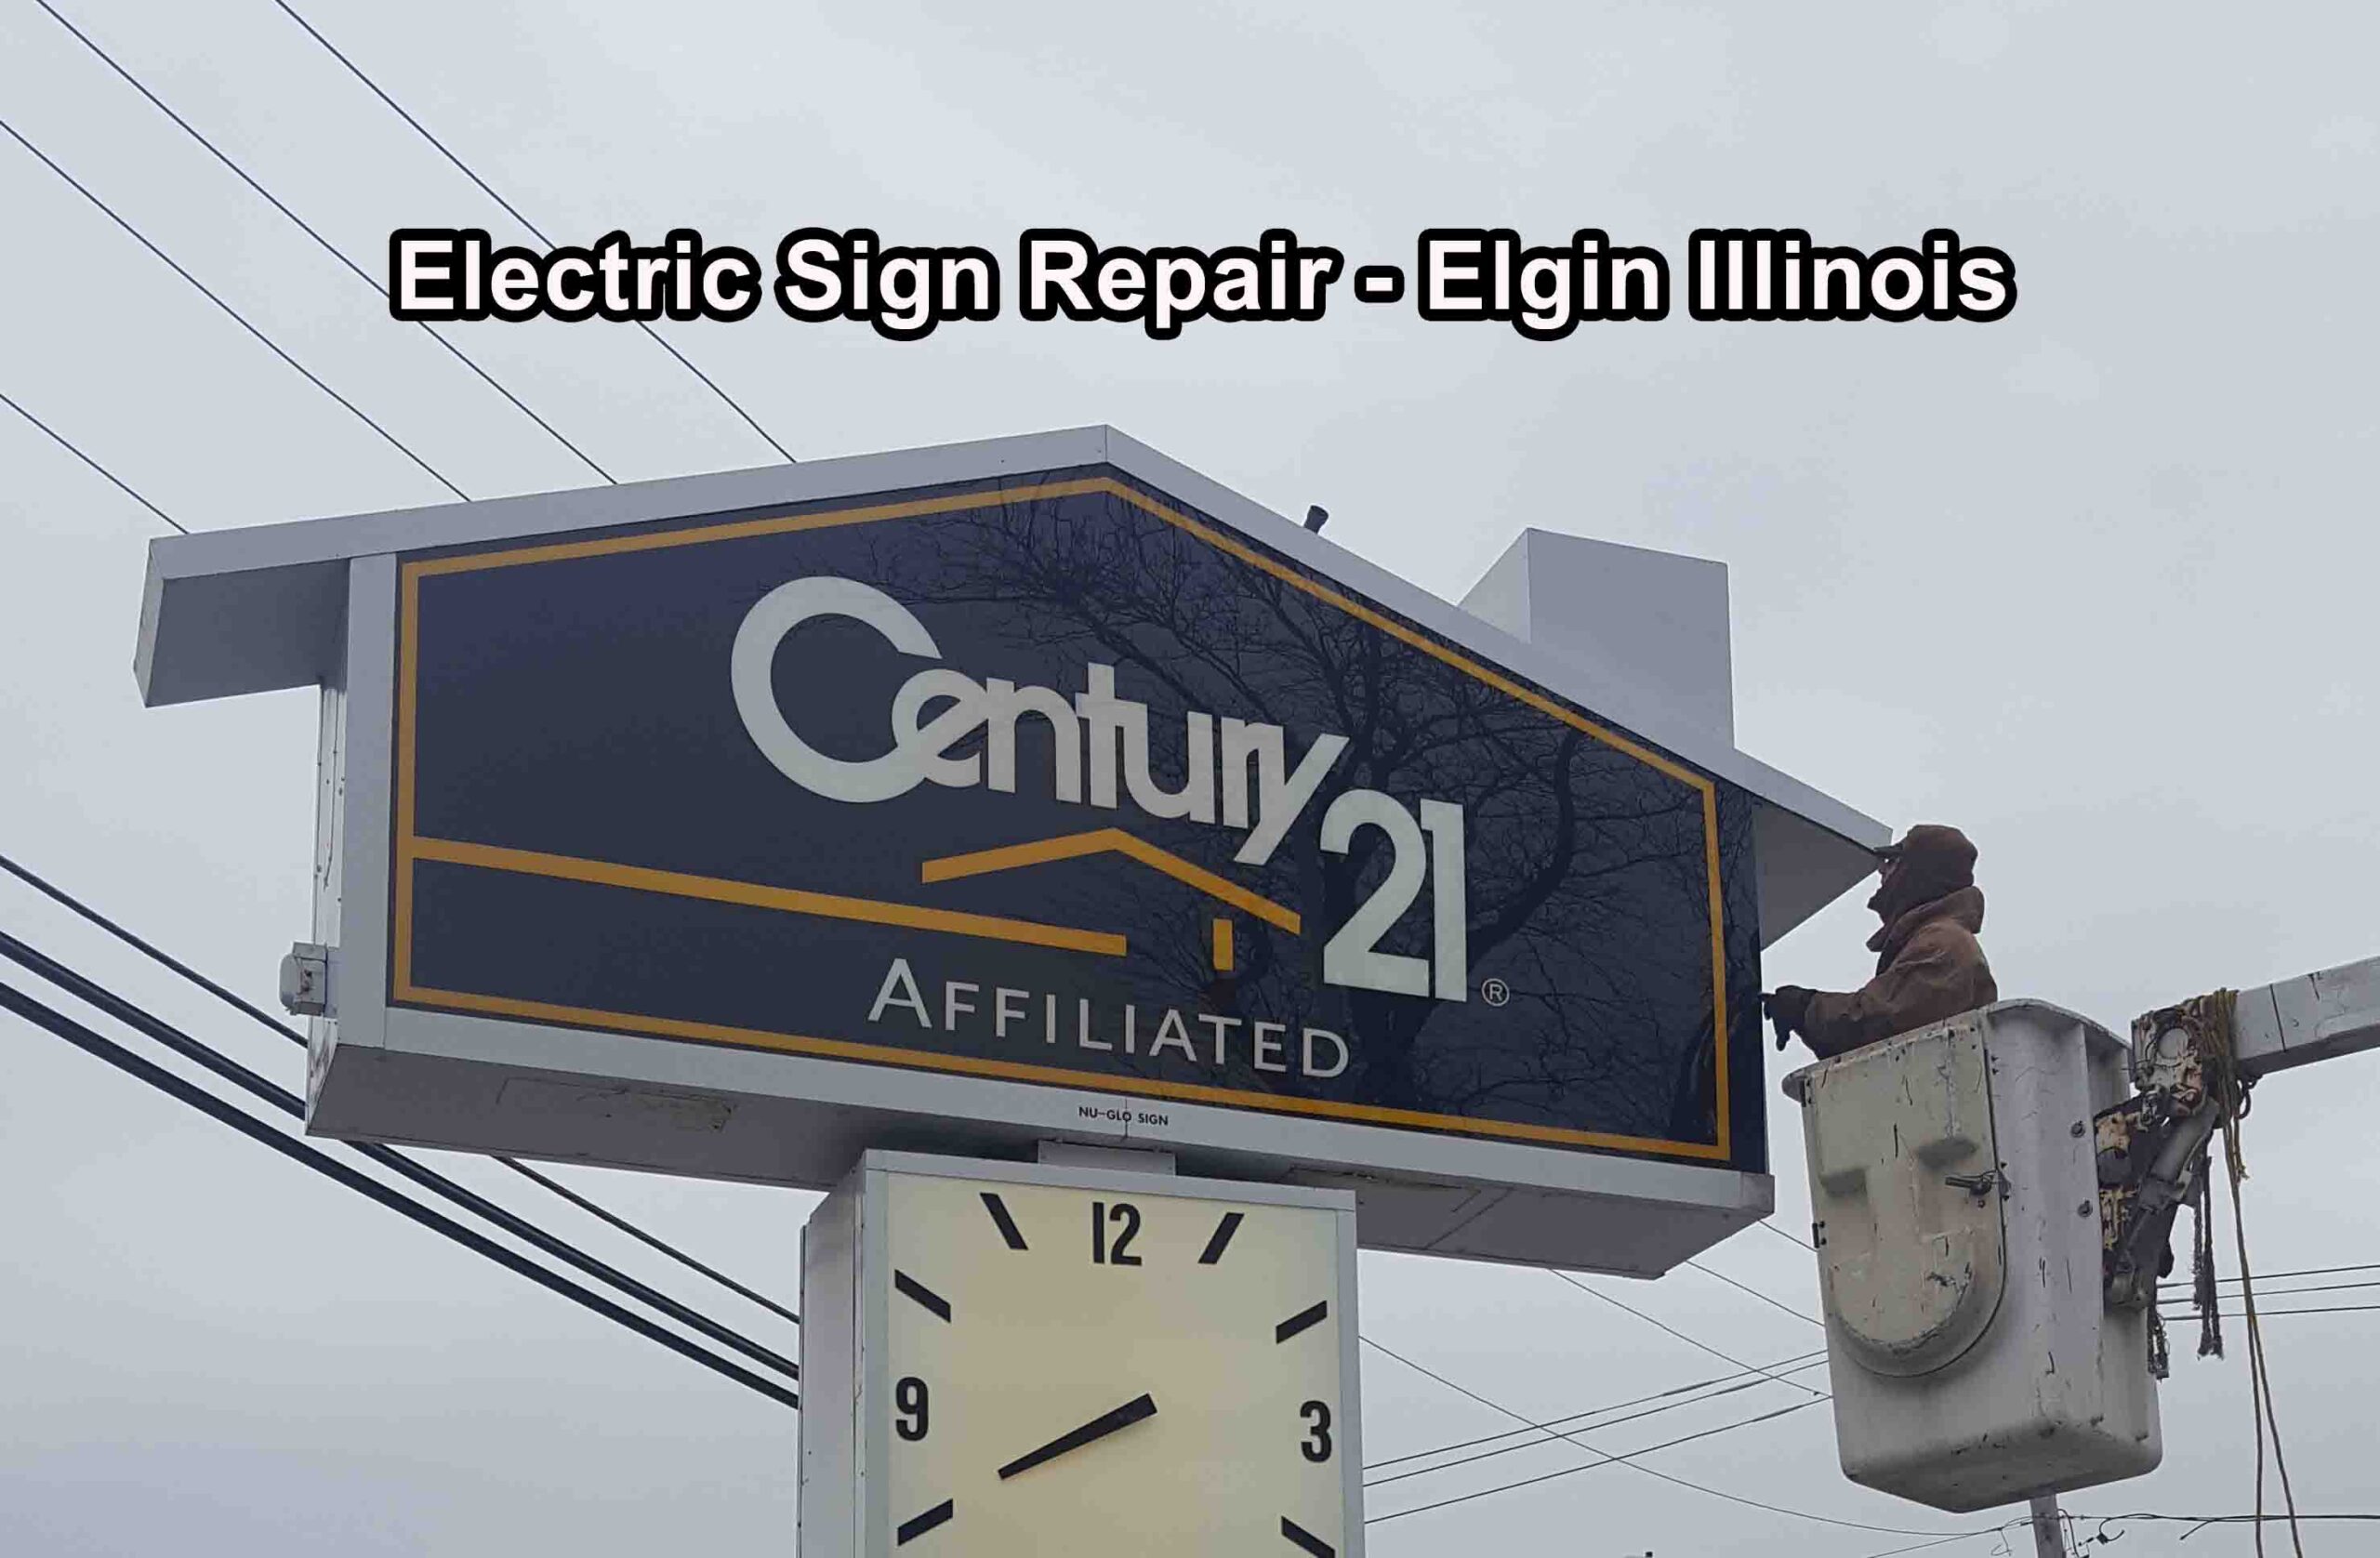 Electric Sign Repair - Elgin Illinois